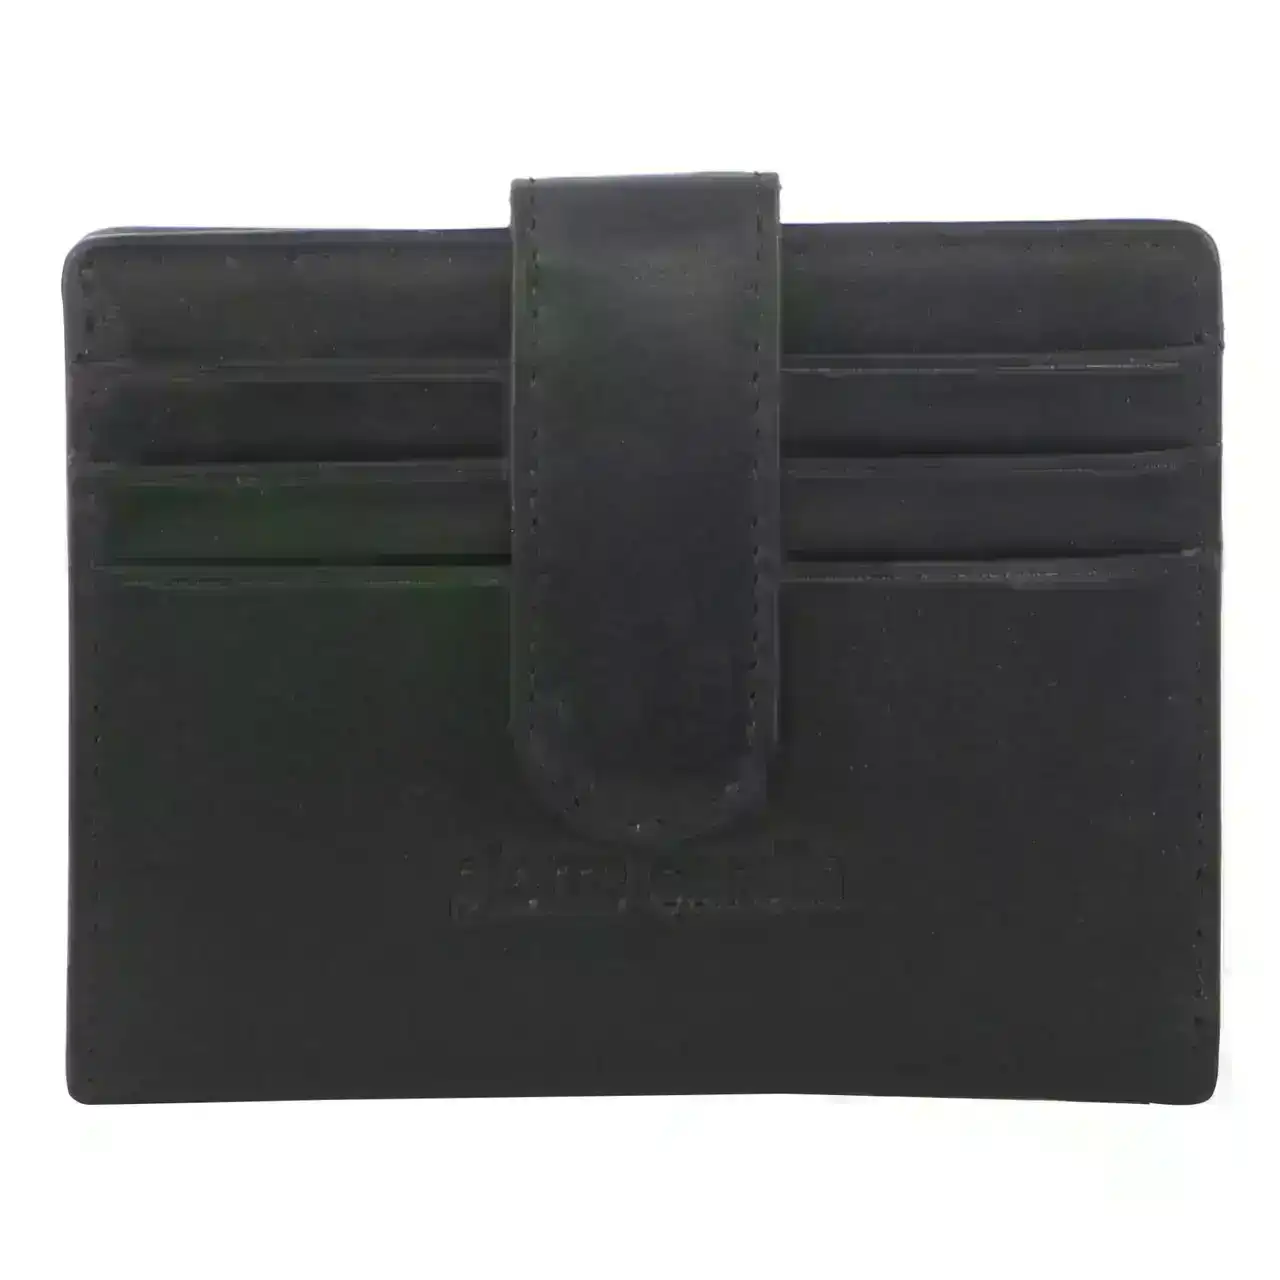 Pierre Cardin Mens Leather Bi-Fold Wallet Credit Card Holder w/ RFID Protection - Black